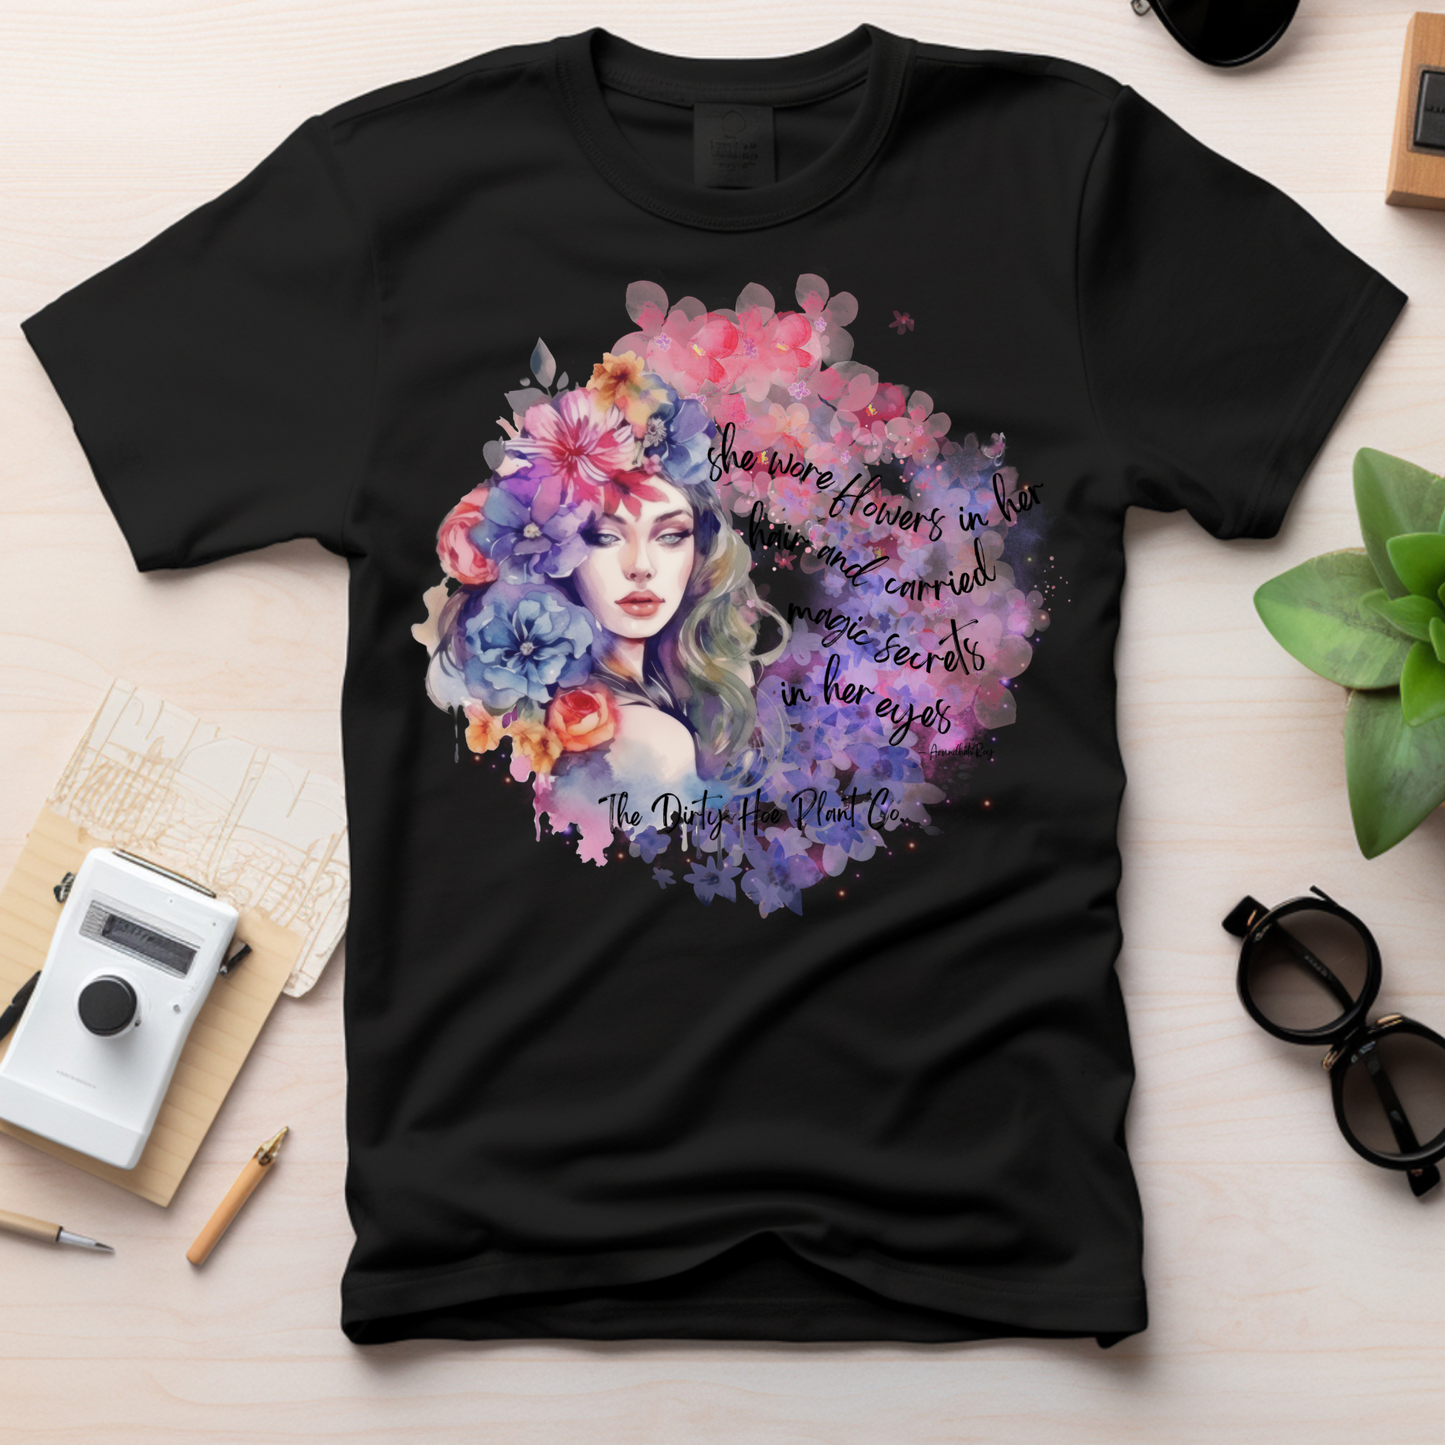 She Wore Flowers - T-shirt